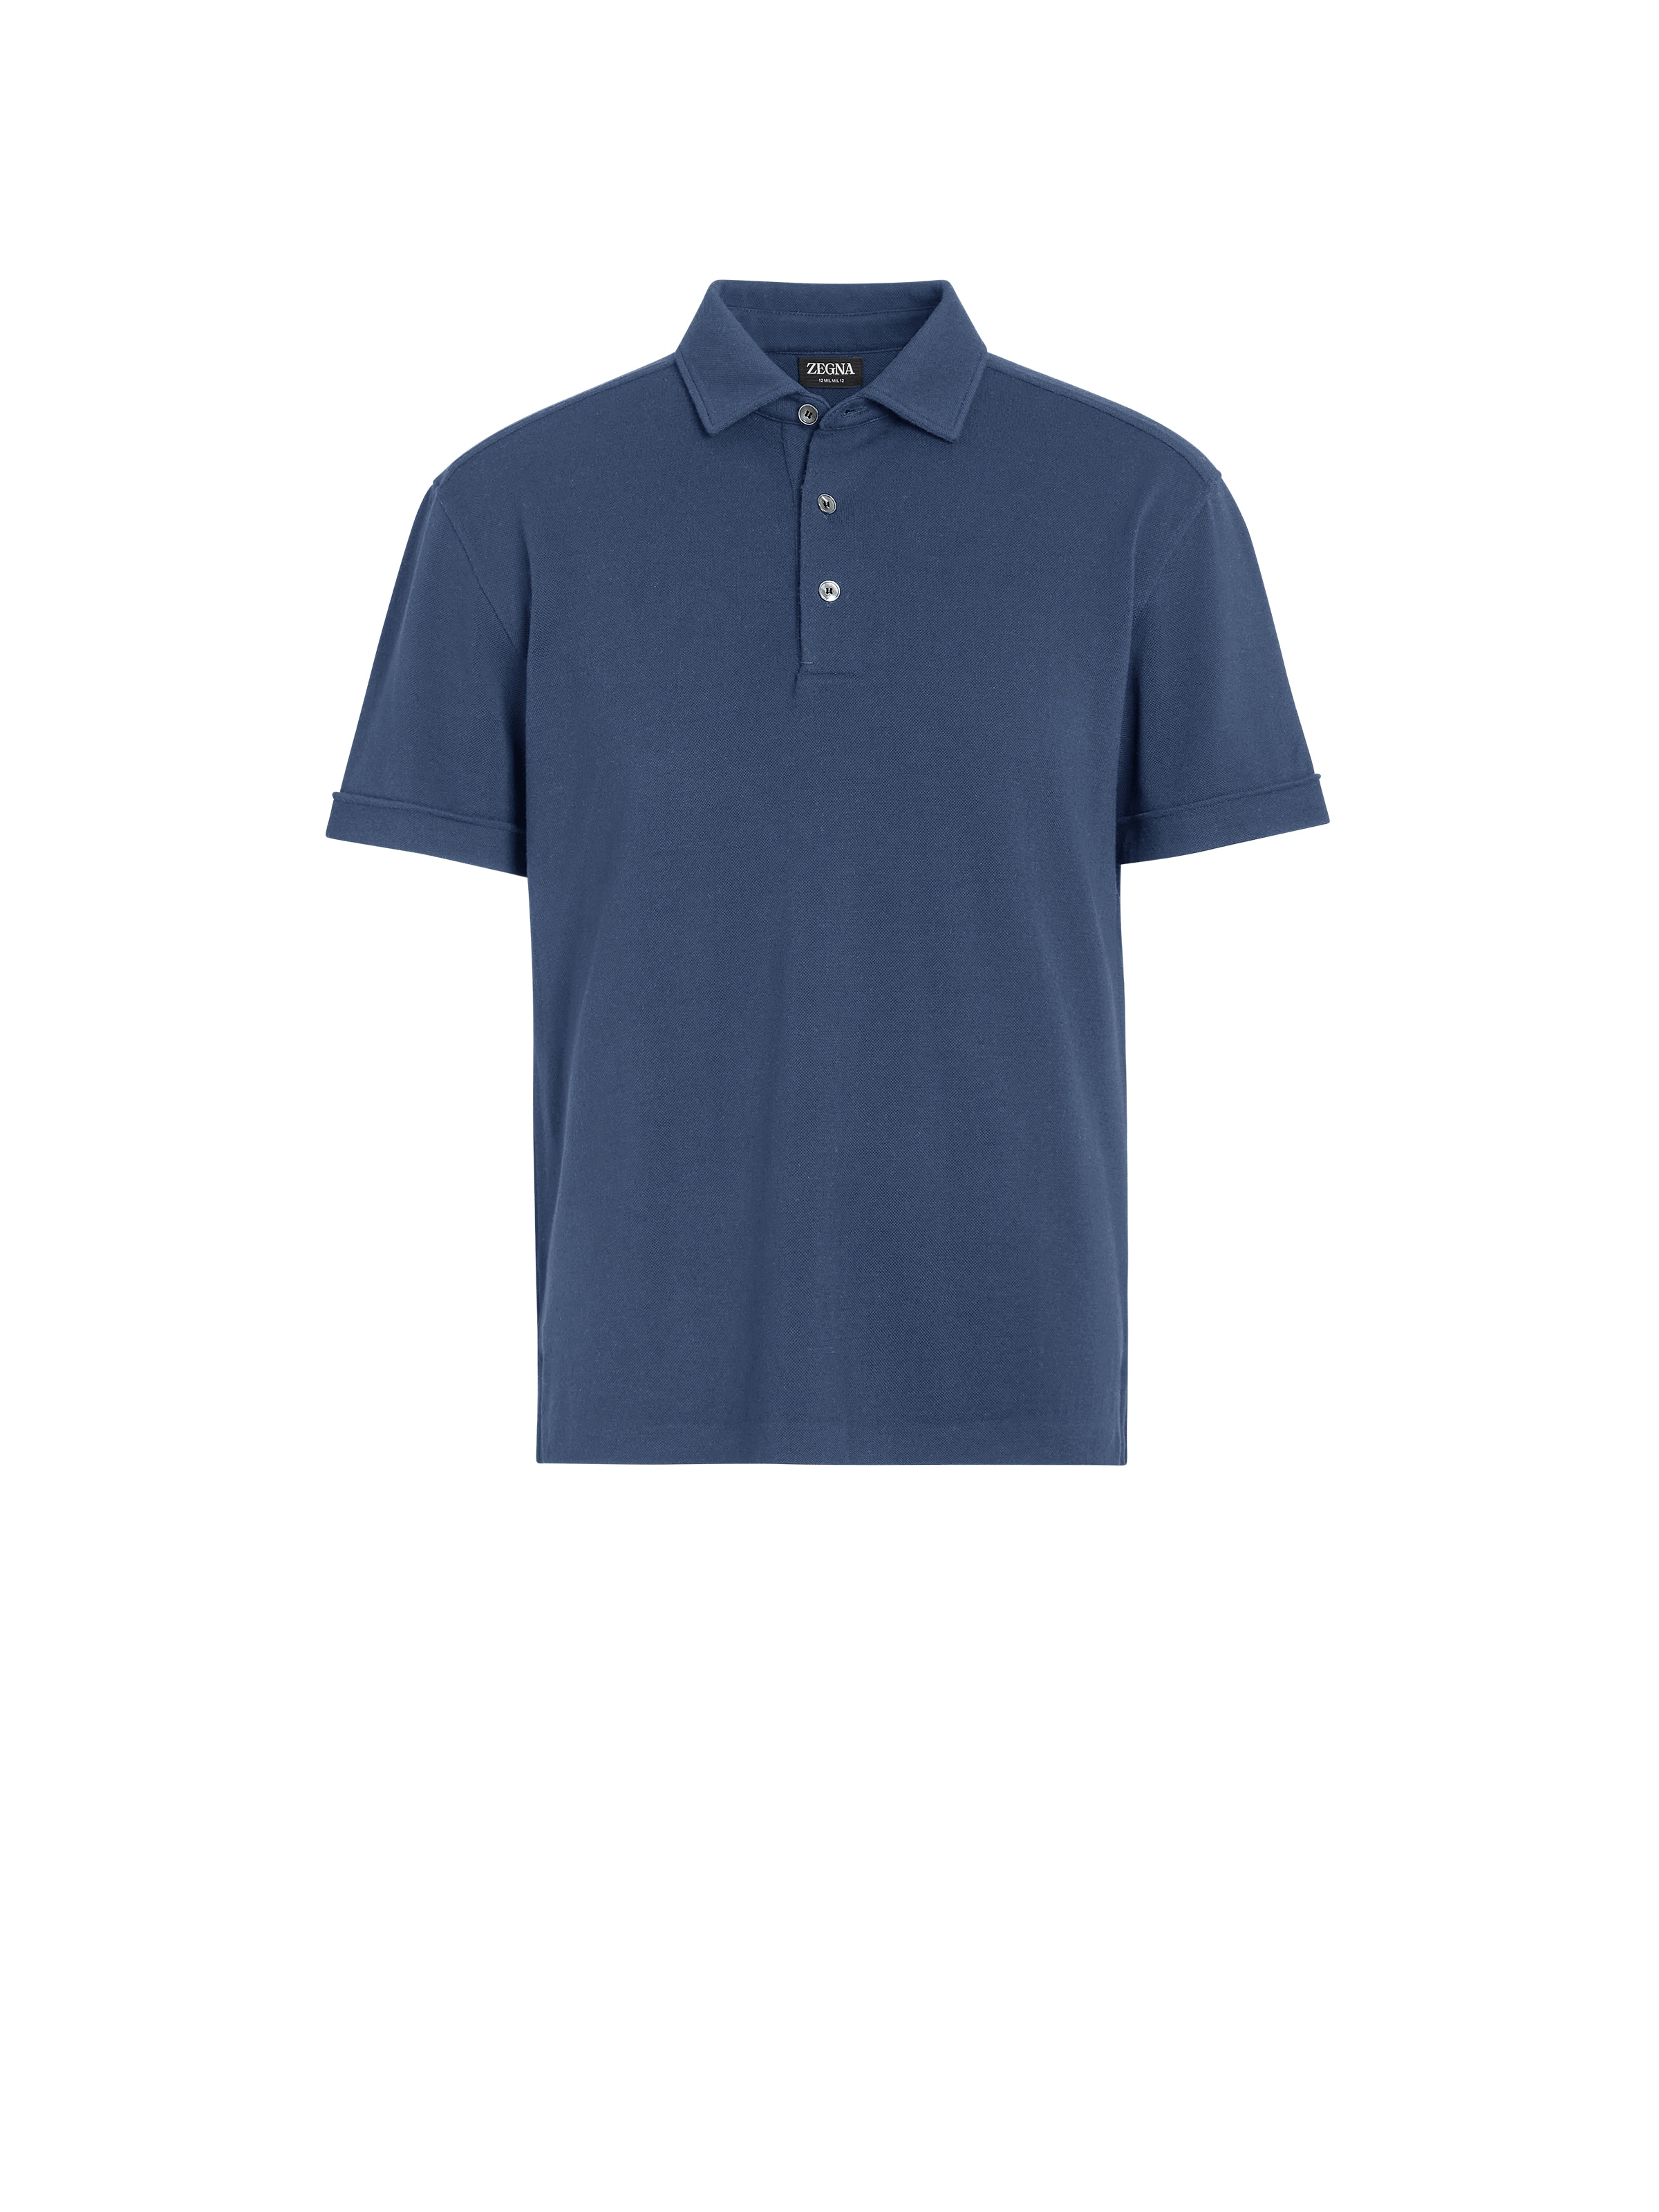 Zegna Utility Blue 12milmil12 Wool Polo Shirt